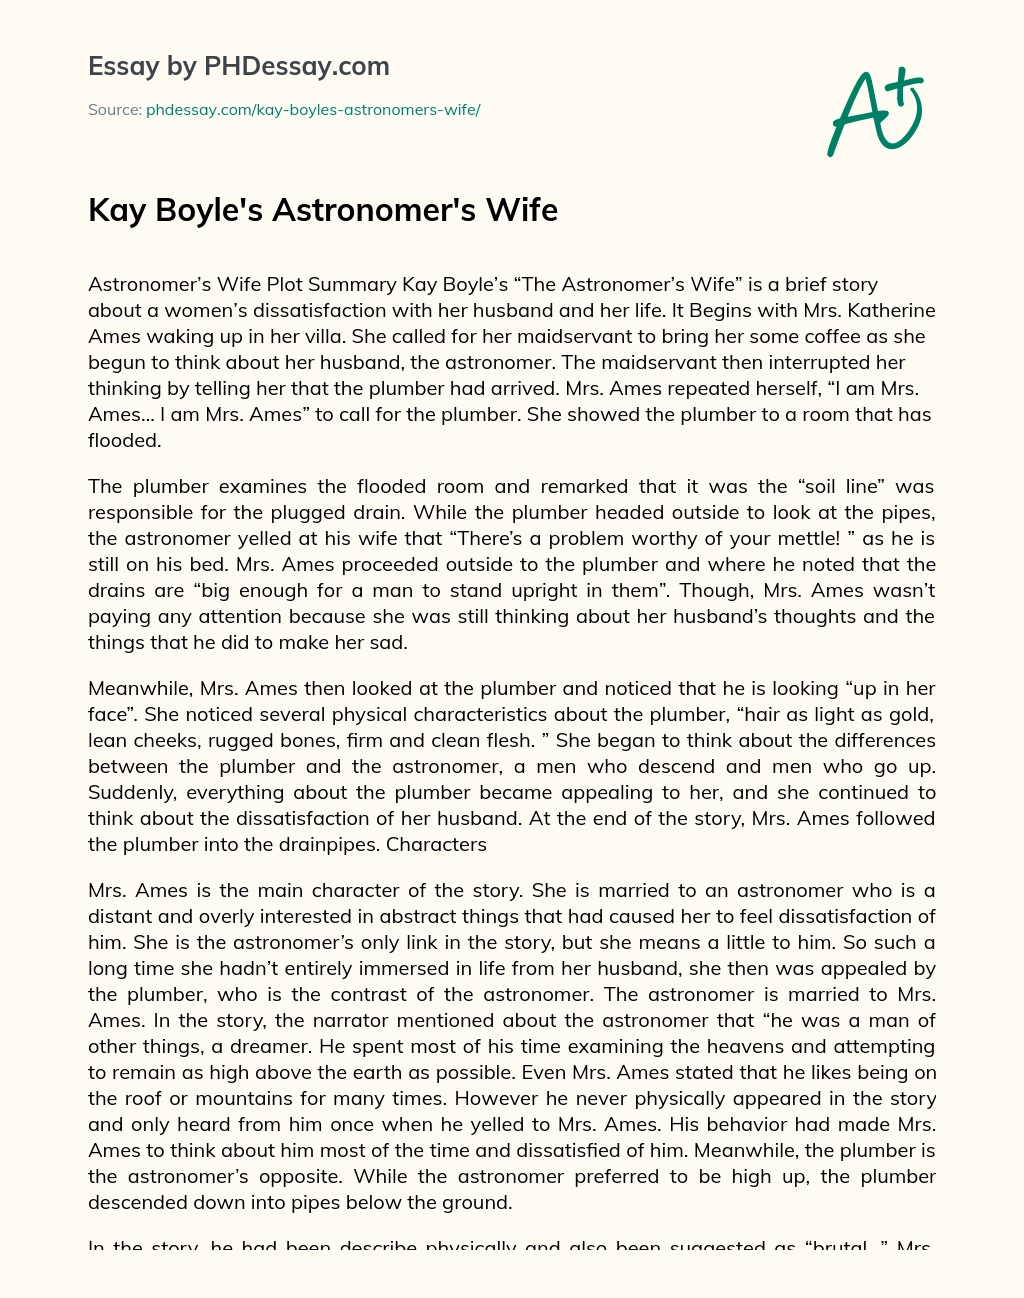 Kay Boyle’s Astronomer’s Wife essay